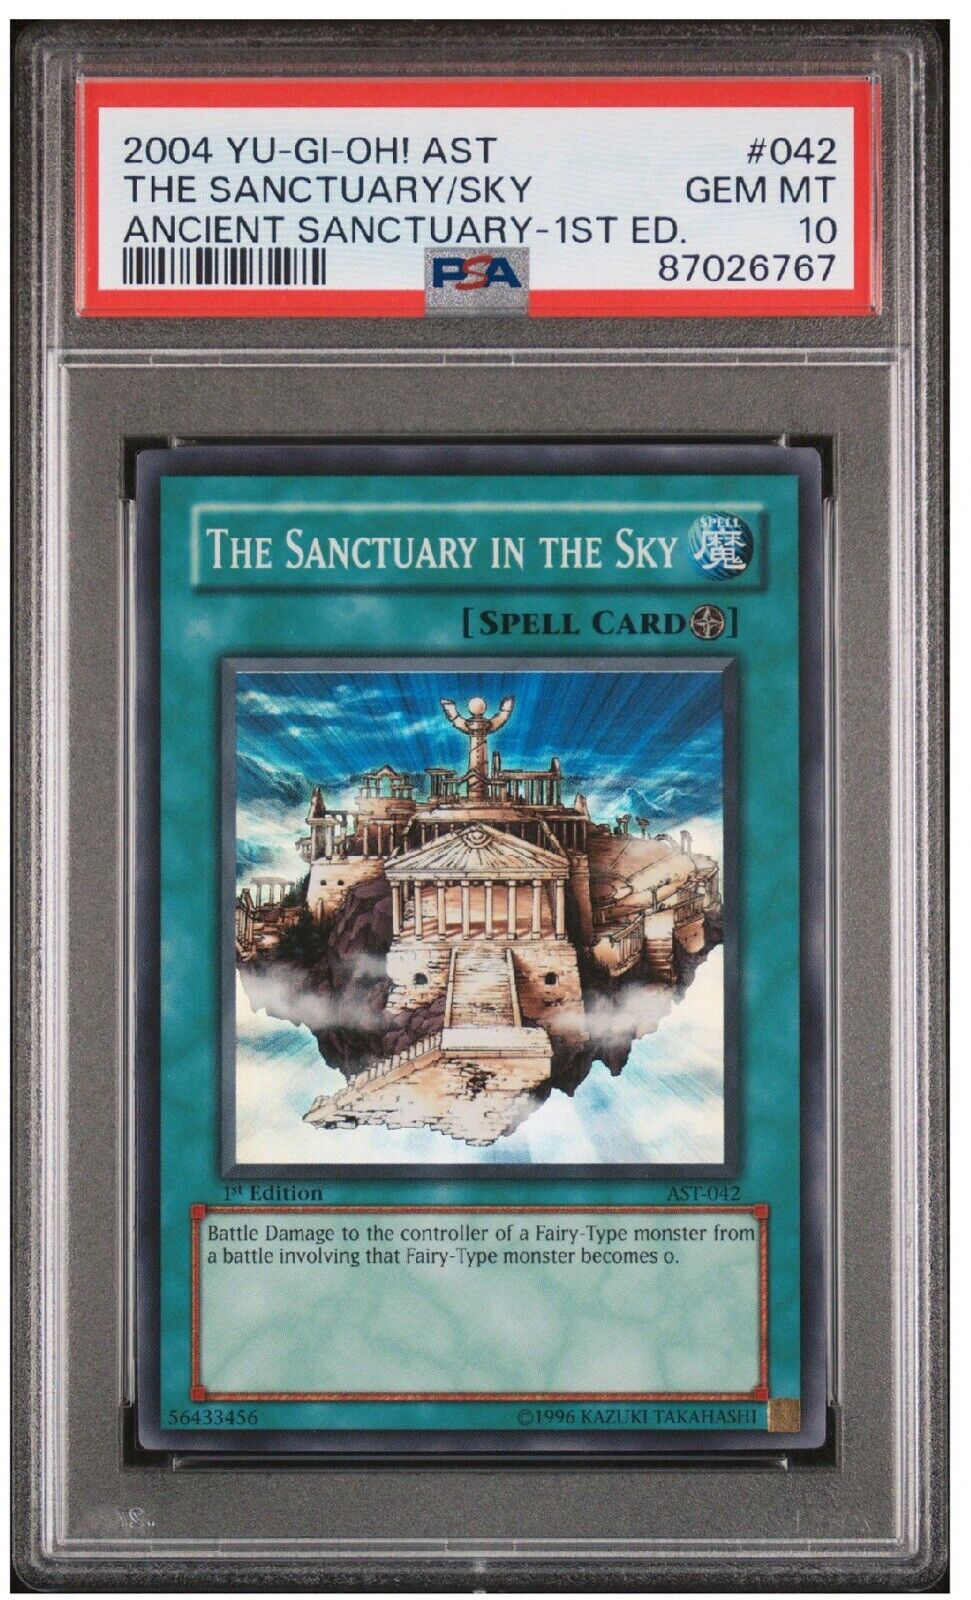 PSA 10 -The Sanctuary in the Sky AST-042 Super Rare 1st Edition Yugioh